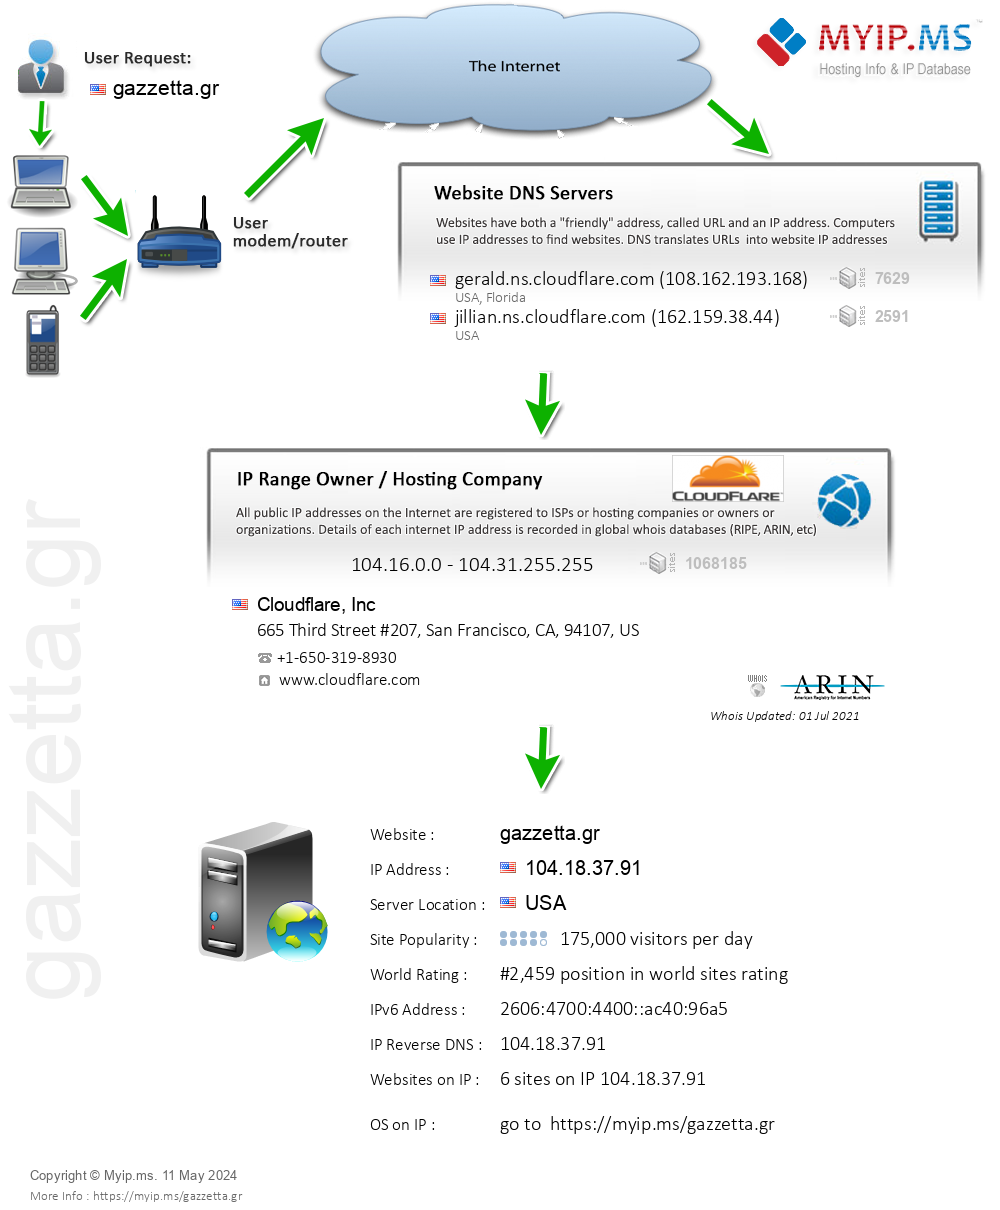 Gazzetta.gr - Website Hosting Visual IP Diagram